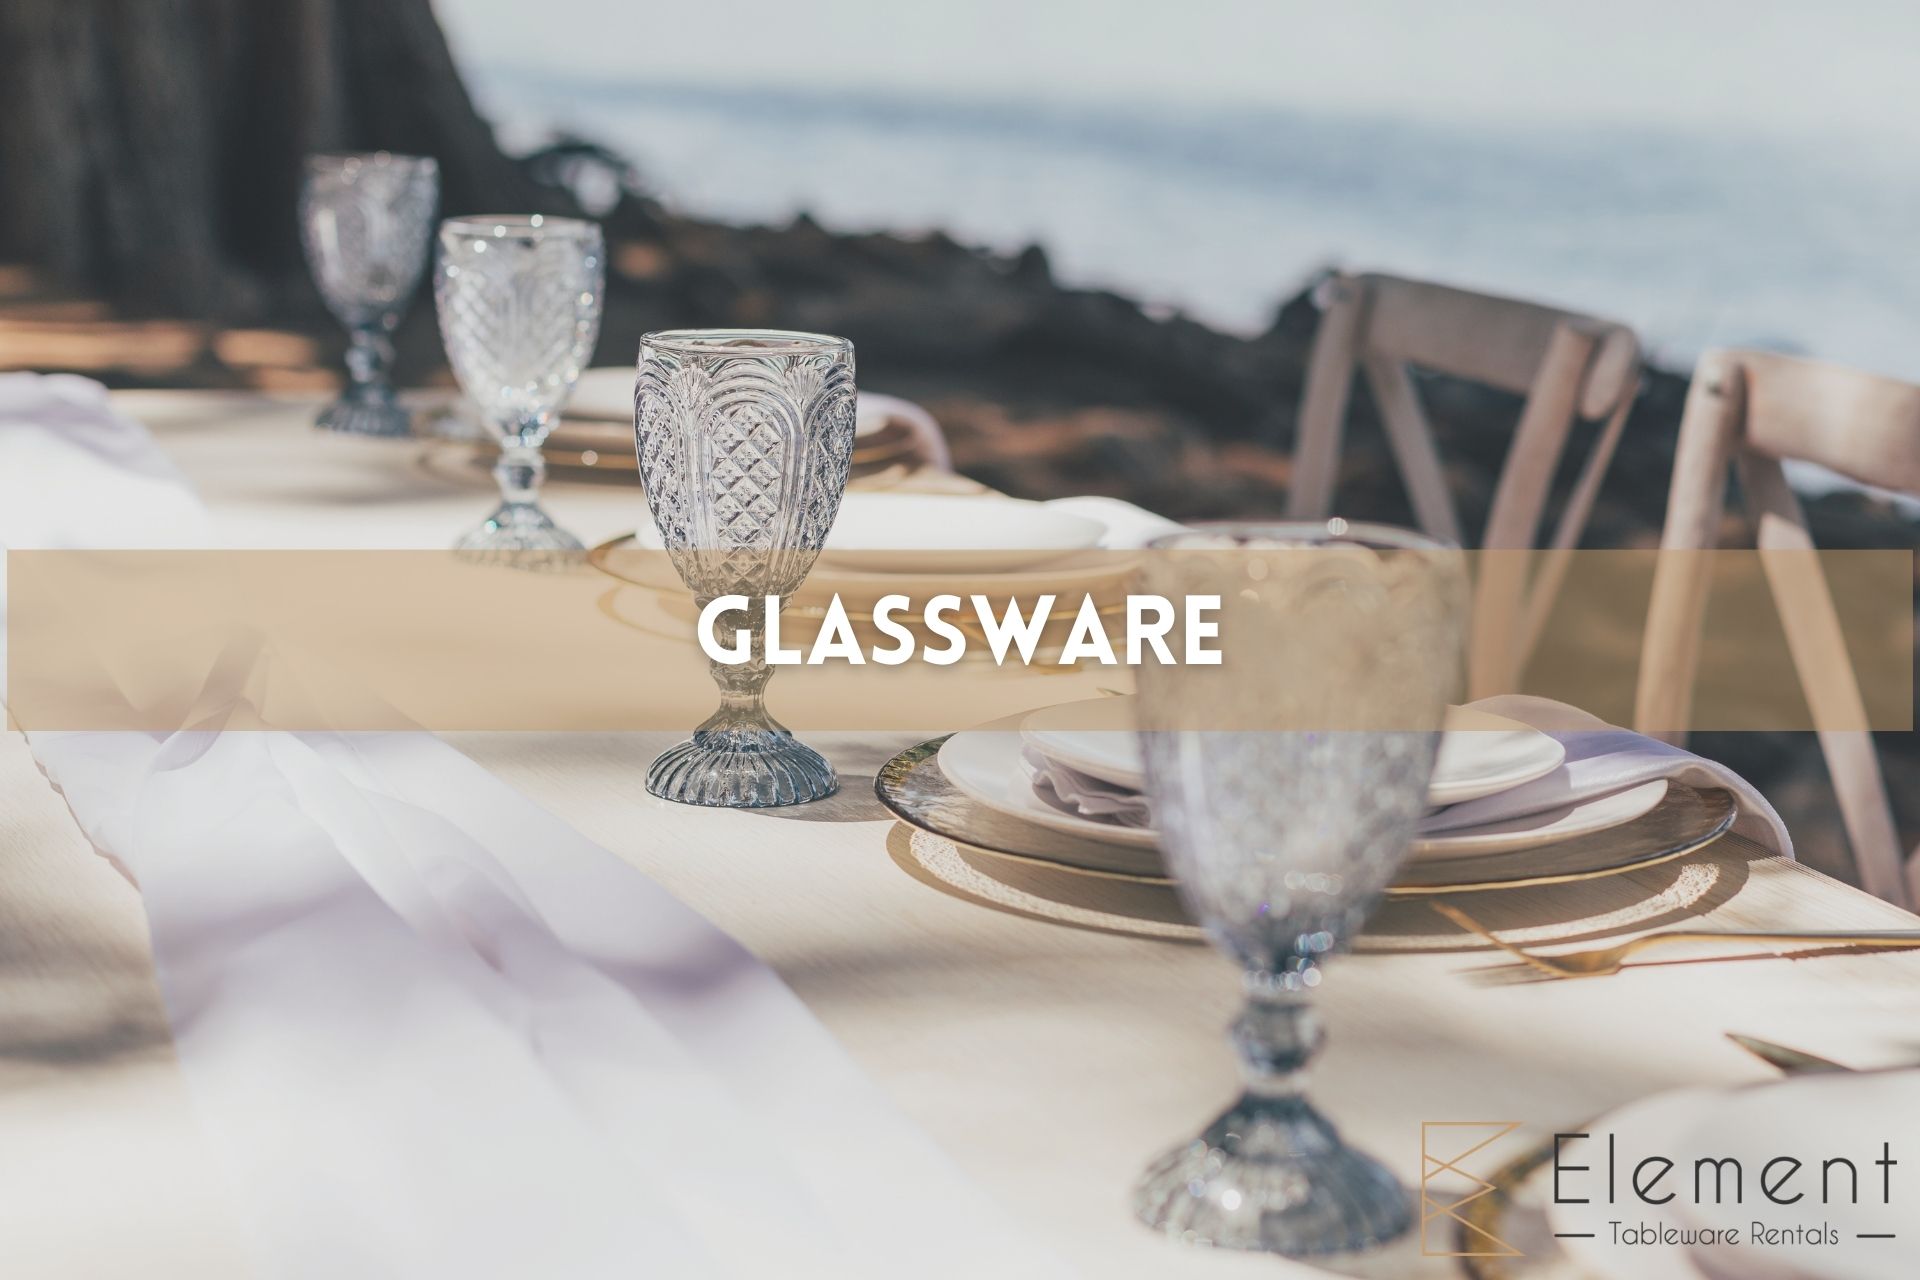 glassware rentals for events